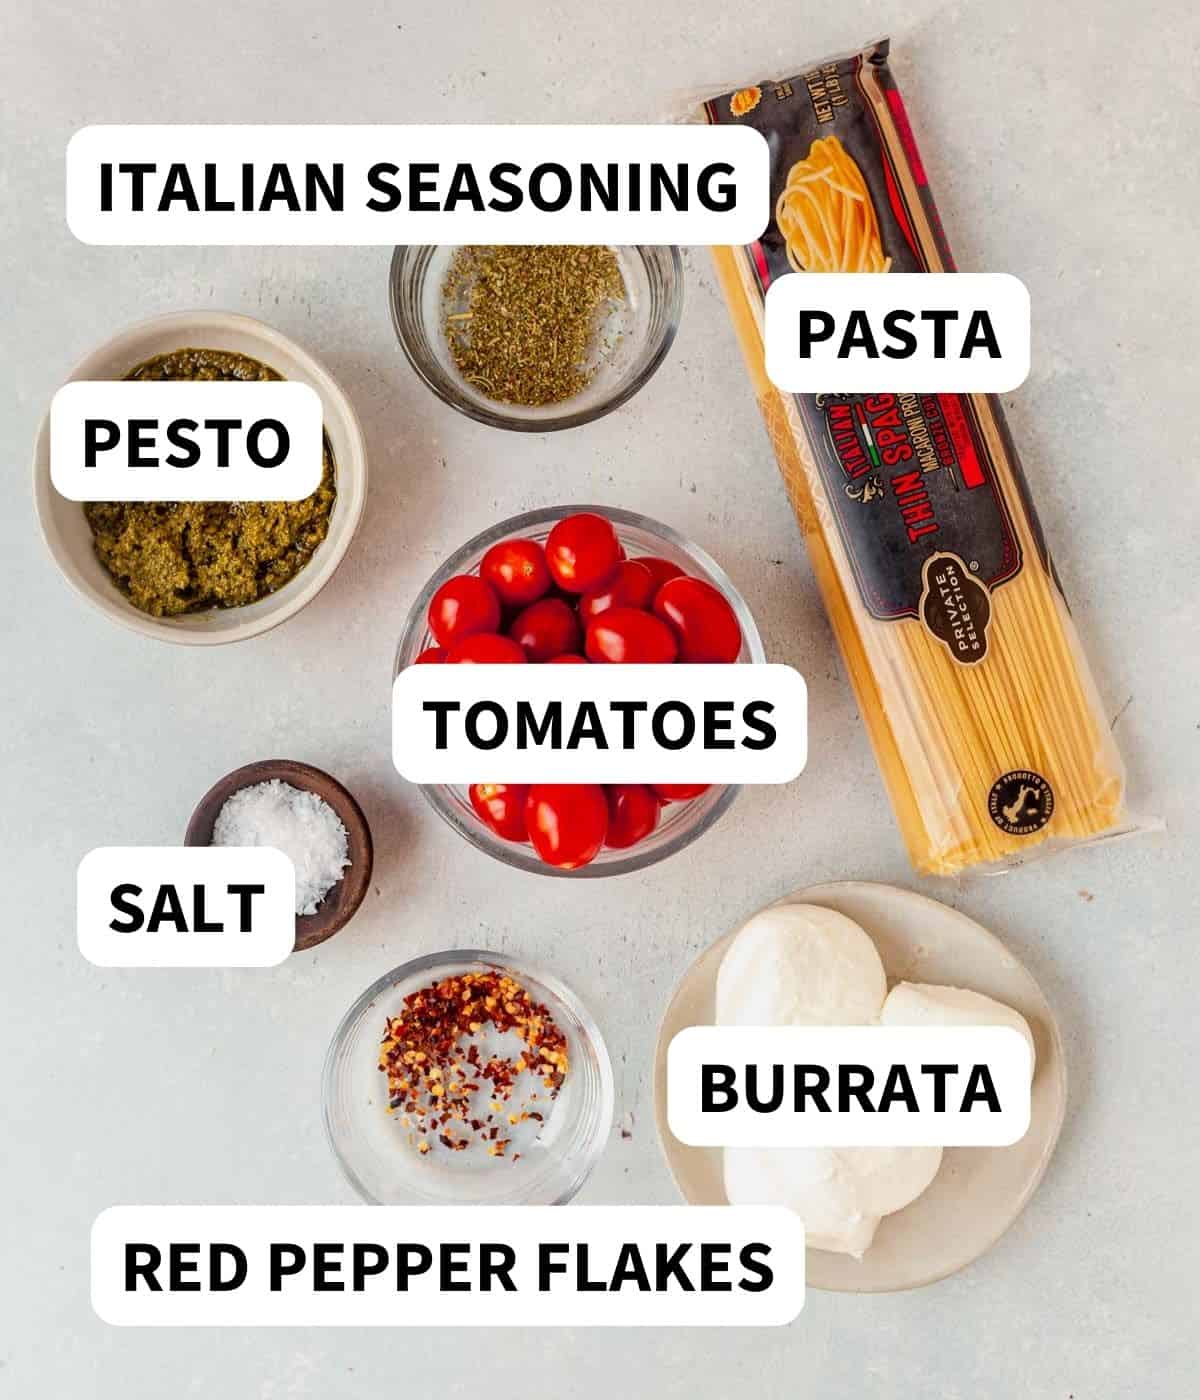 burrata, pasta, tomatoes, pesto and spices on a countertop